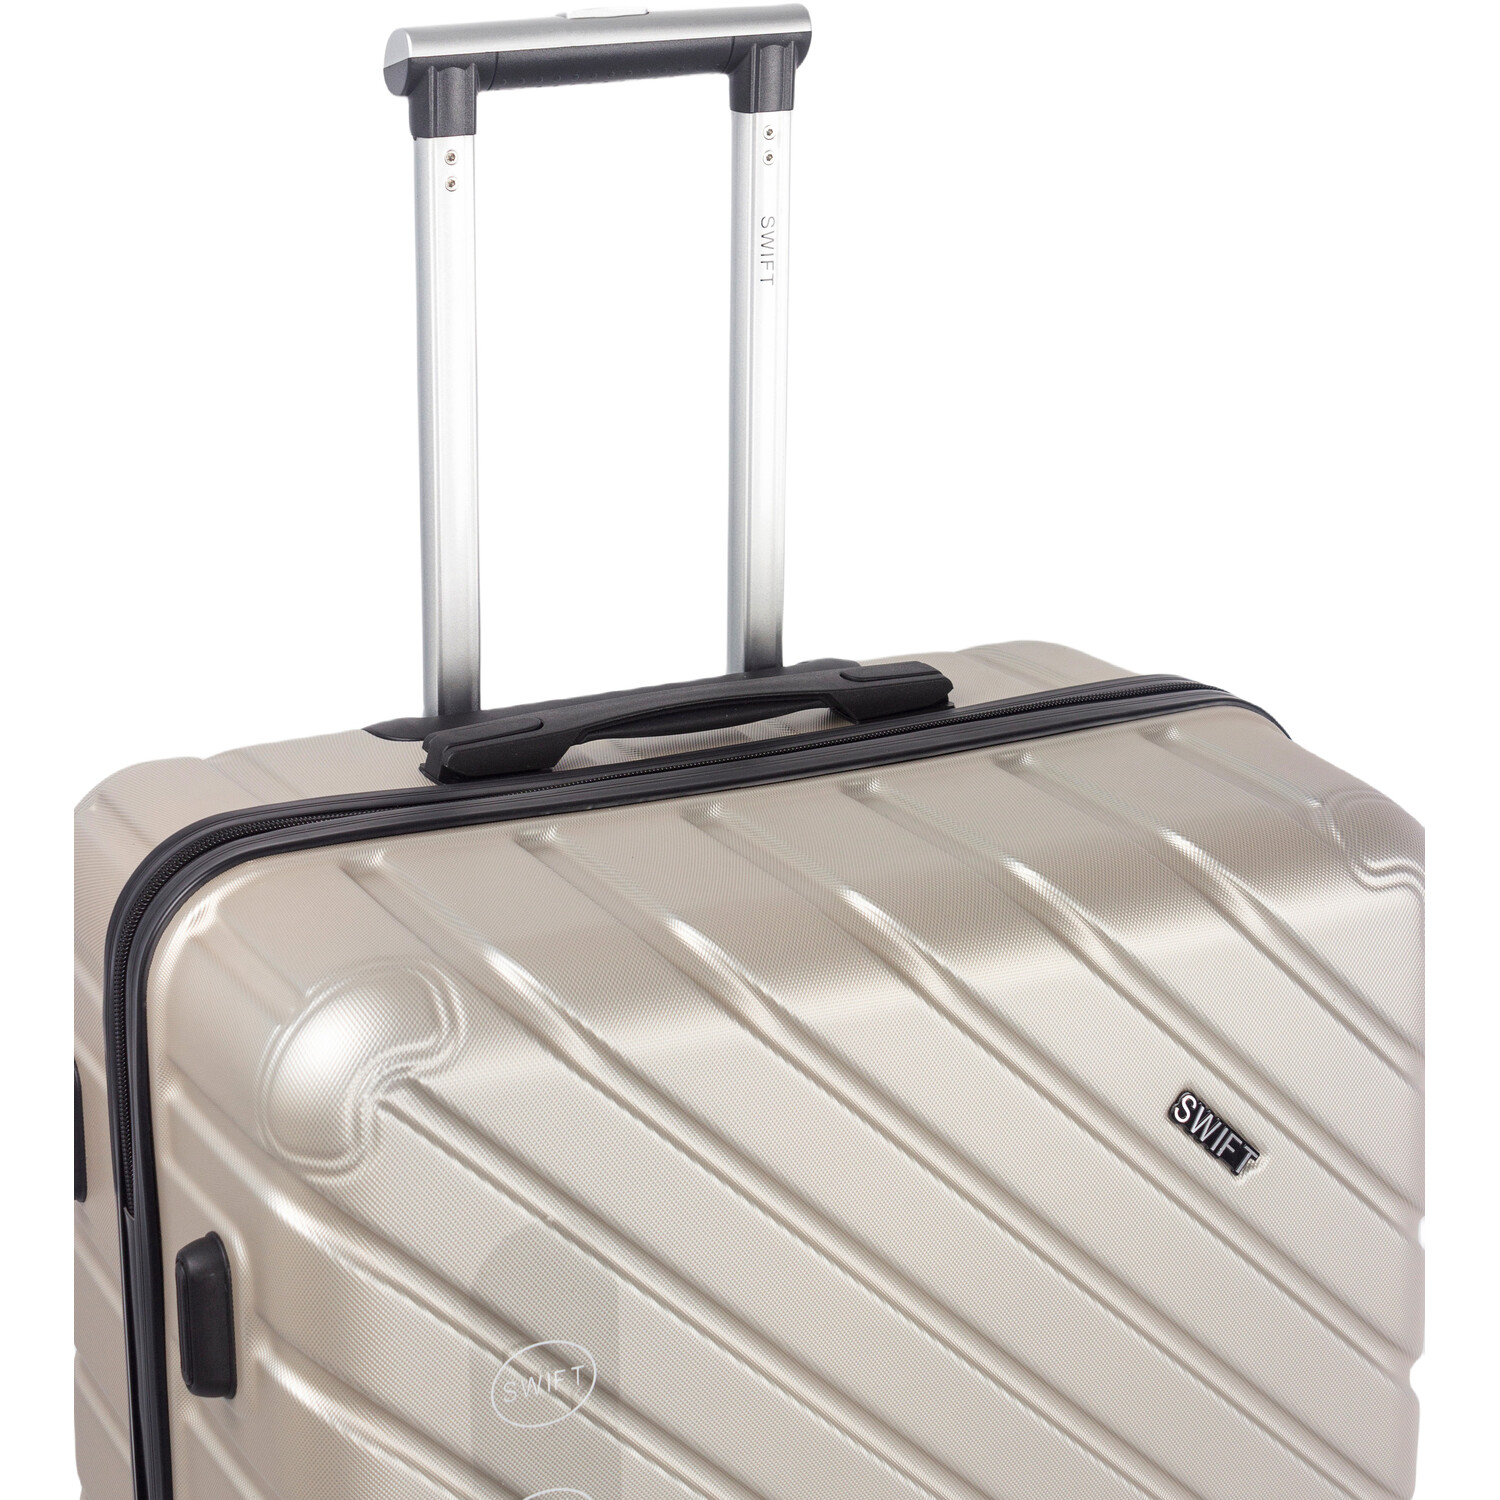 Swift Astral Suitcase - Beige  / Cabin Case Image 4